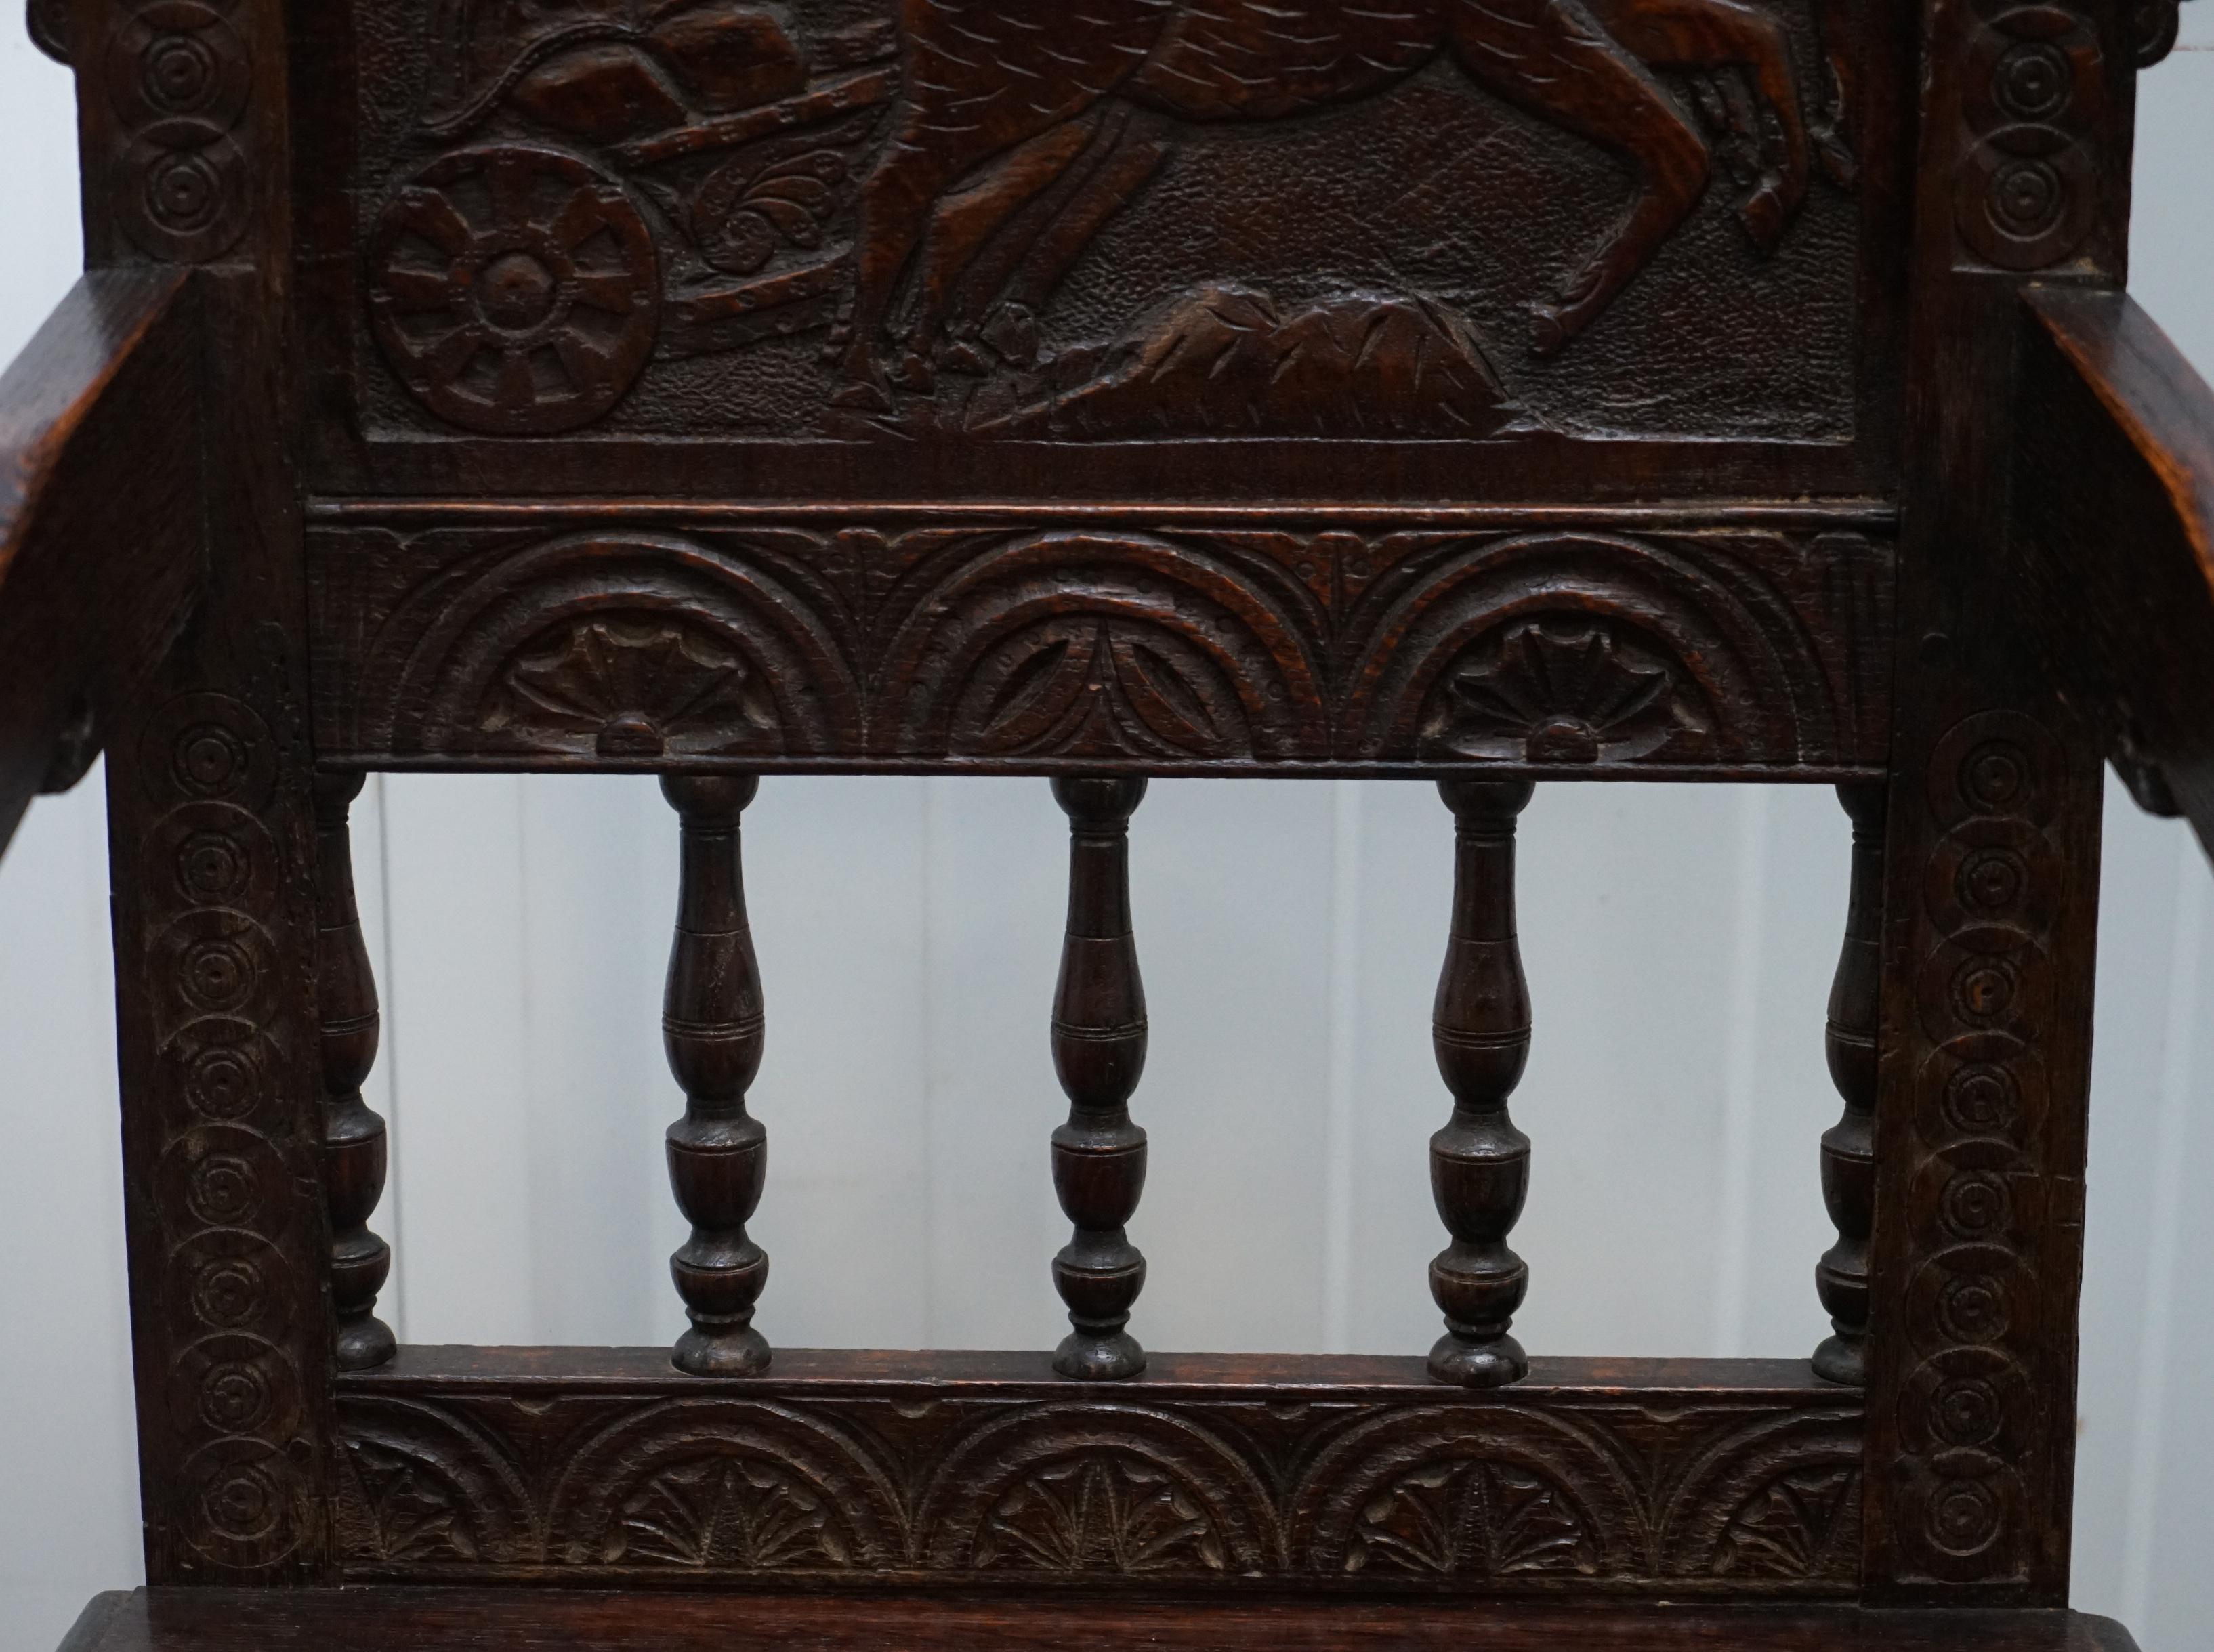 George III Wainscot Armchair Carved Wood Panel Depicting King Charles I Chair, circa 1780